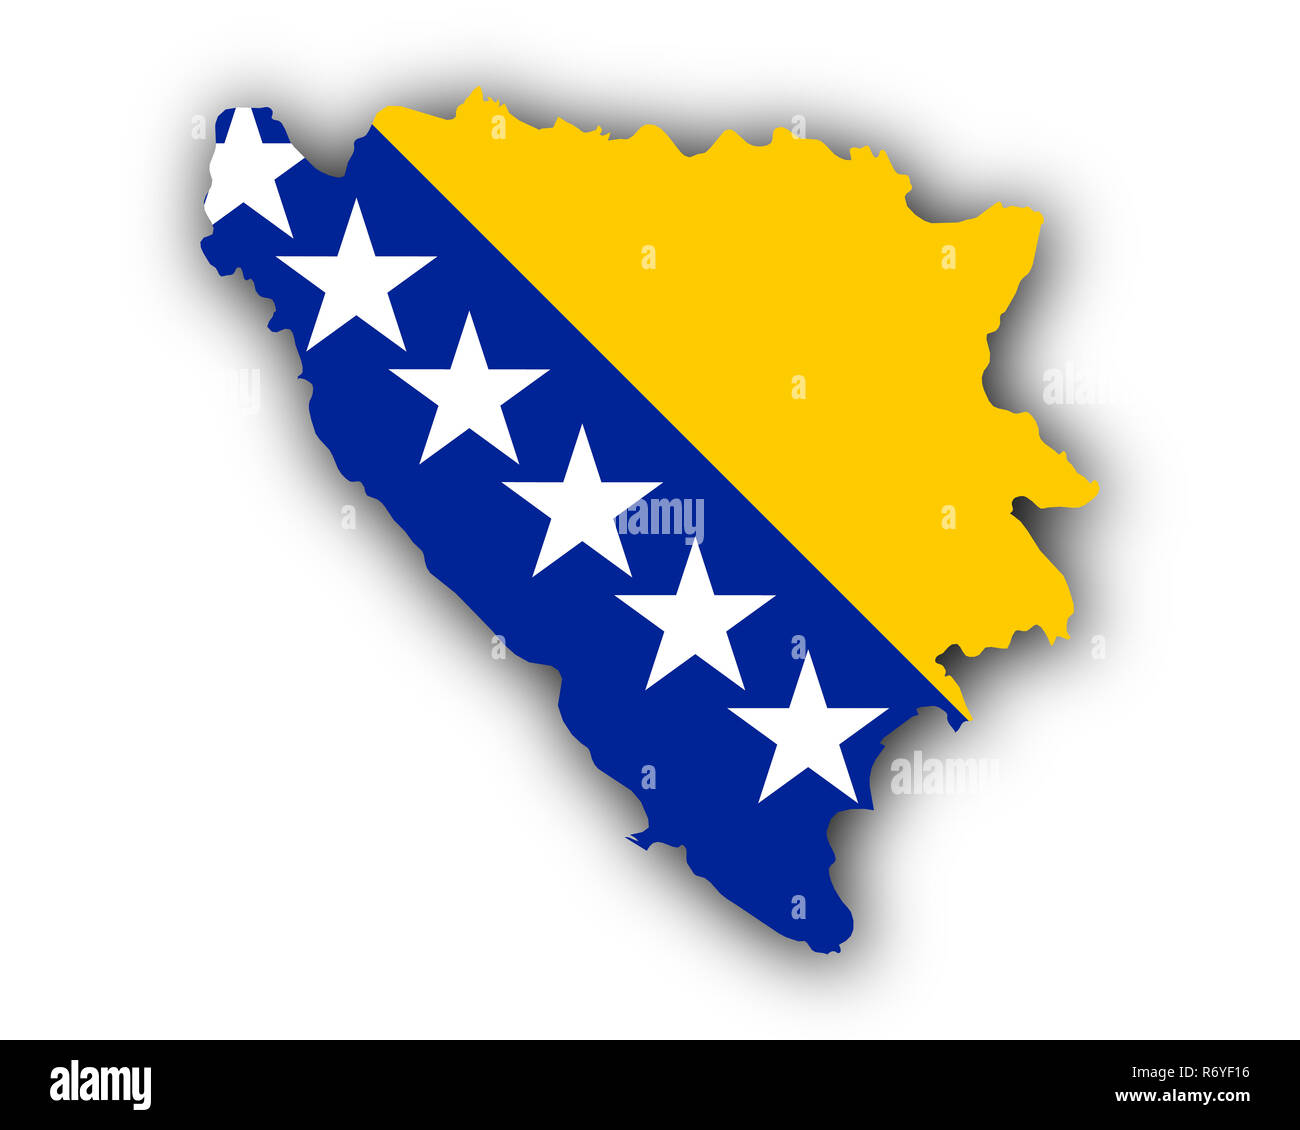 map and flag of bosnia and herzegovina Stock Photo